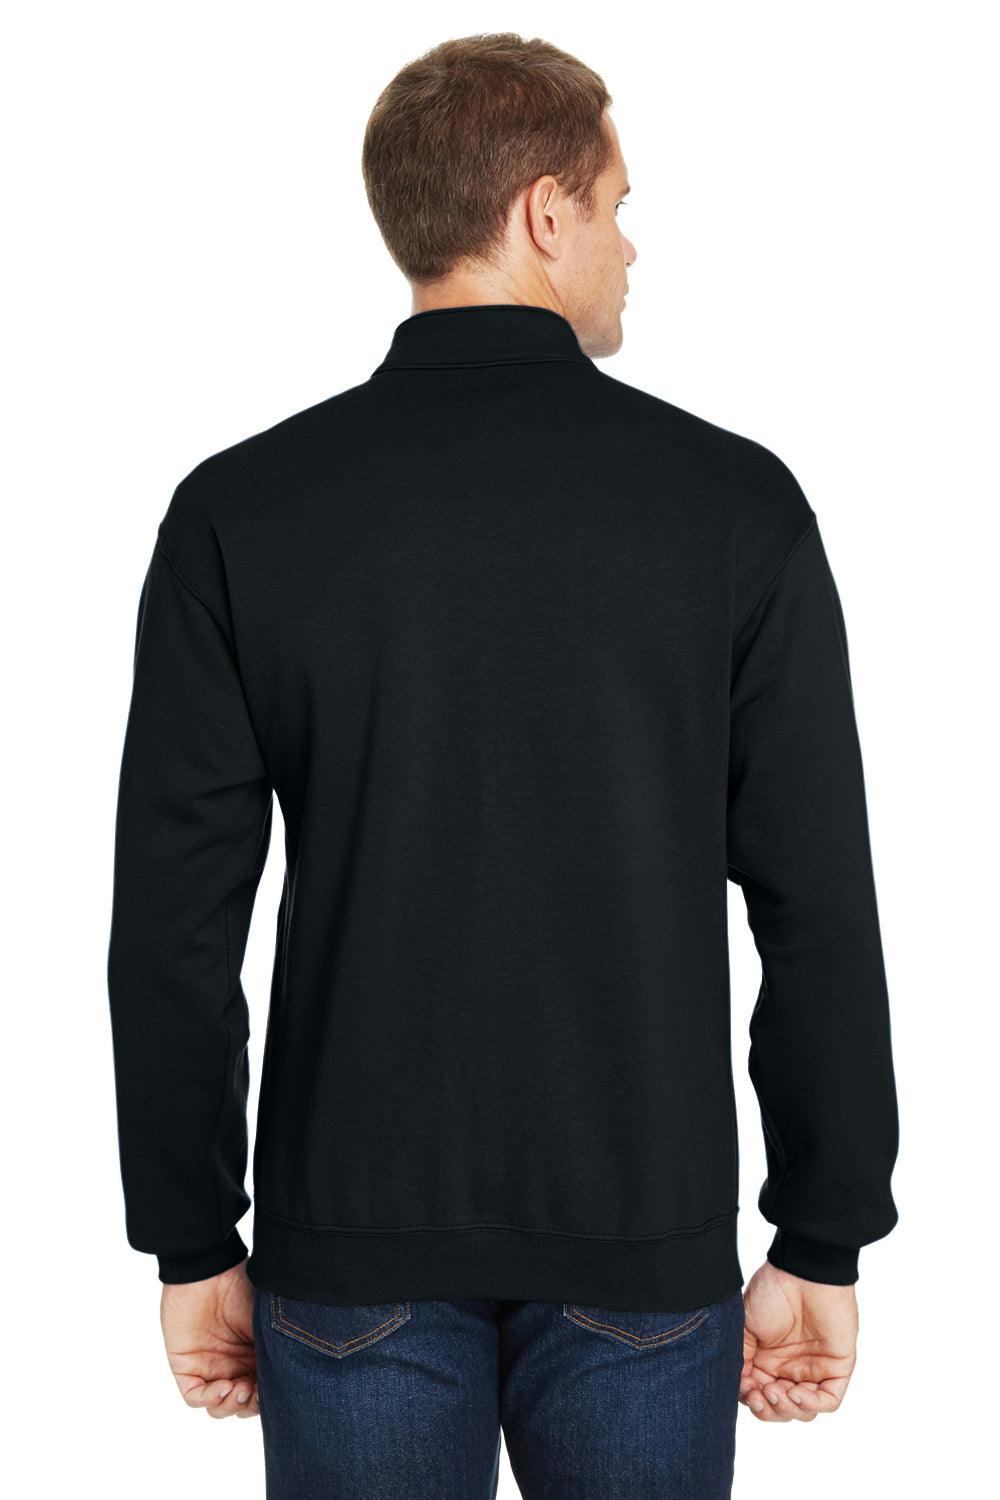 Fruit Of The Loom SF95R Mens Sofspun Fleece 1/4 Zip Sweatshirt Black Back